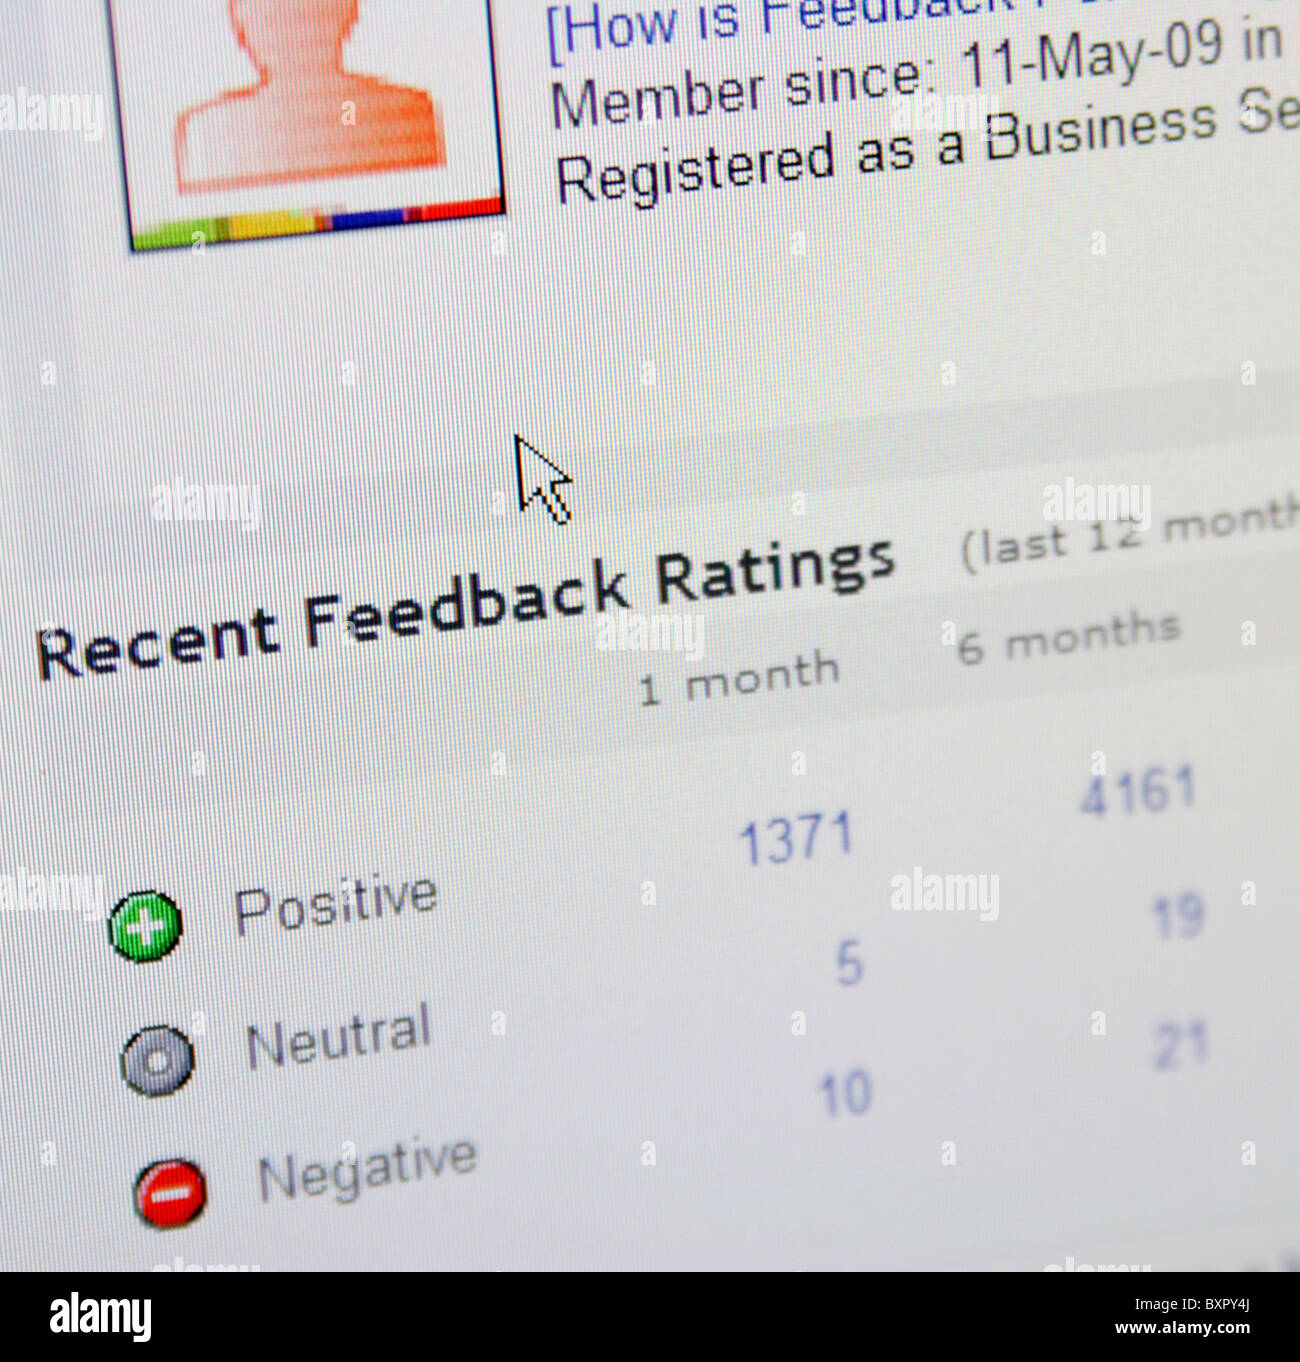 eBay feedback rating Stock Photo